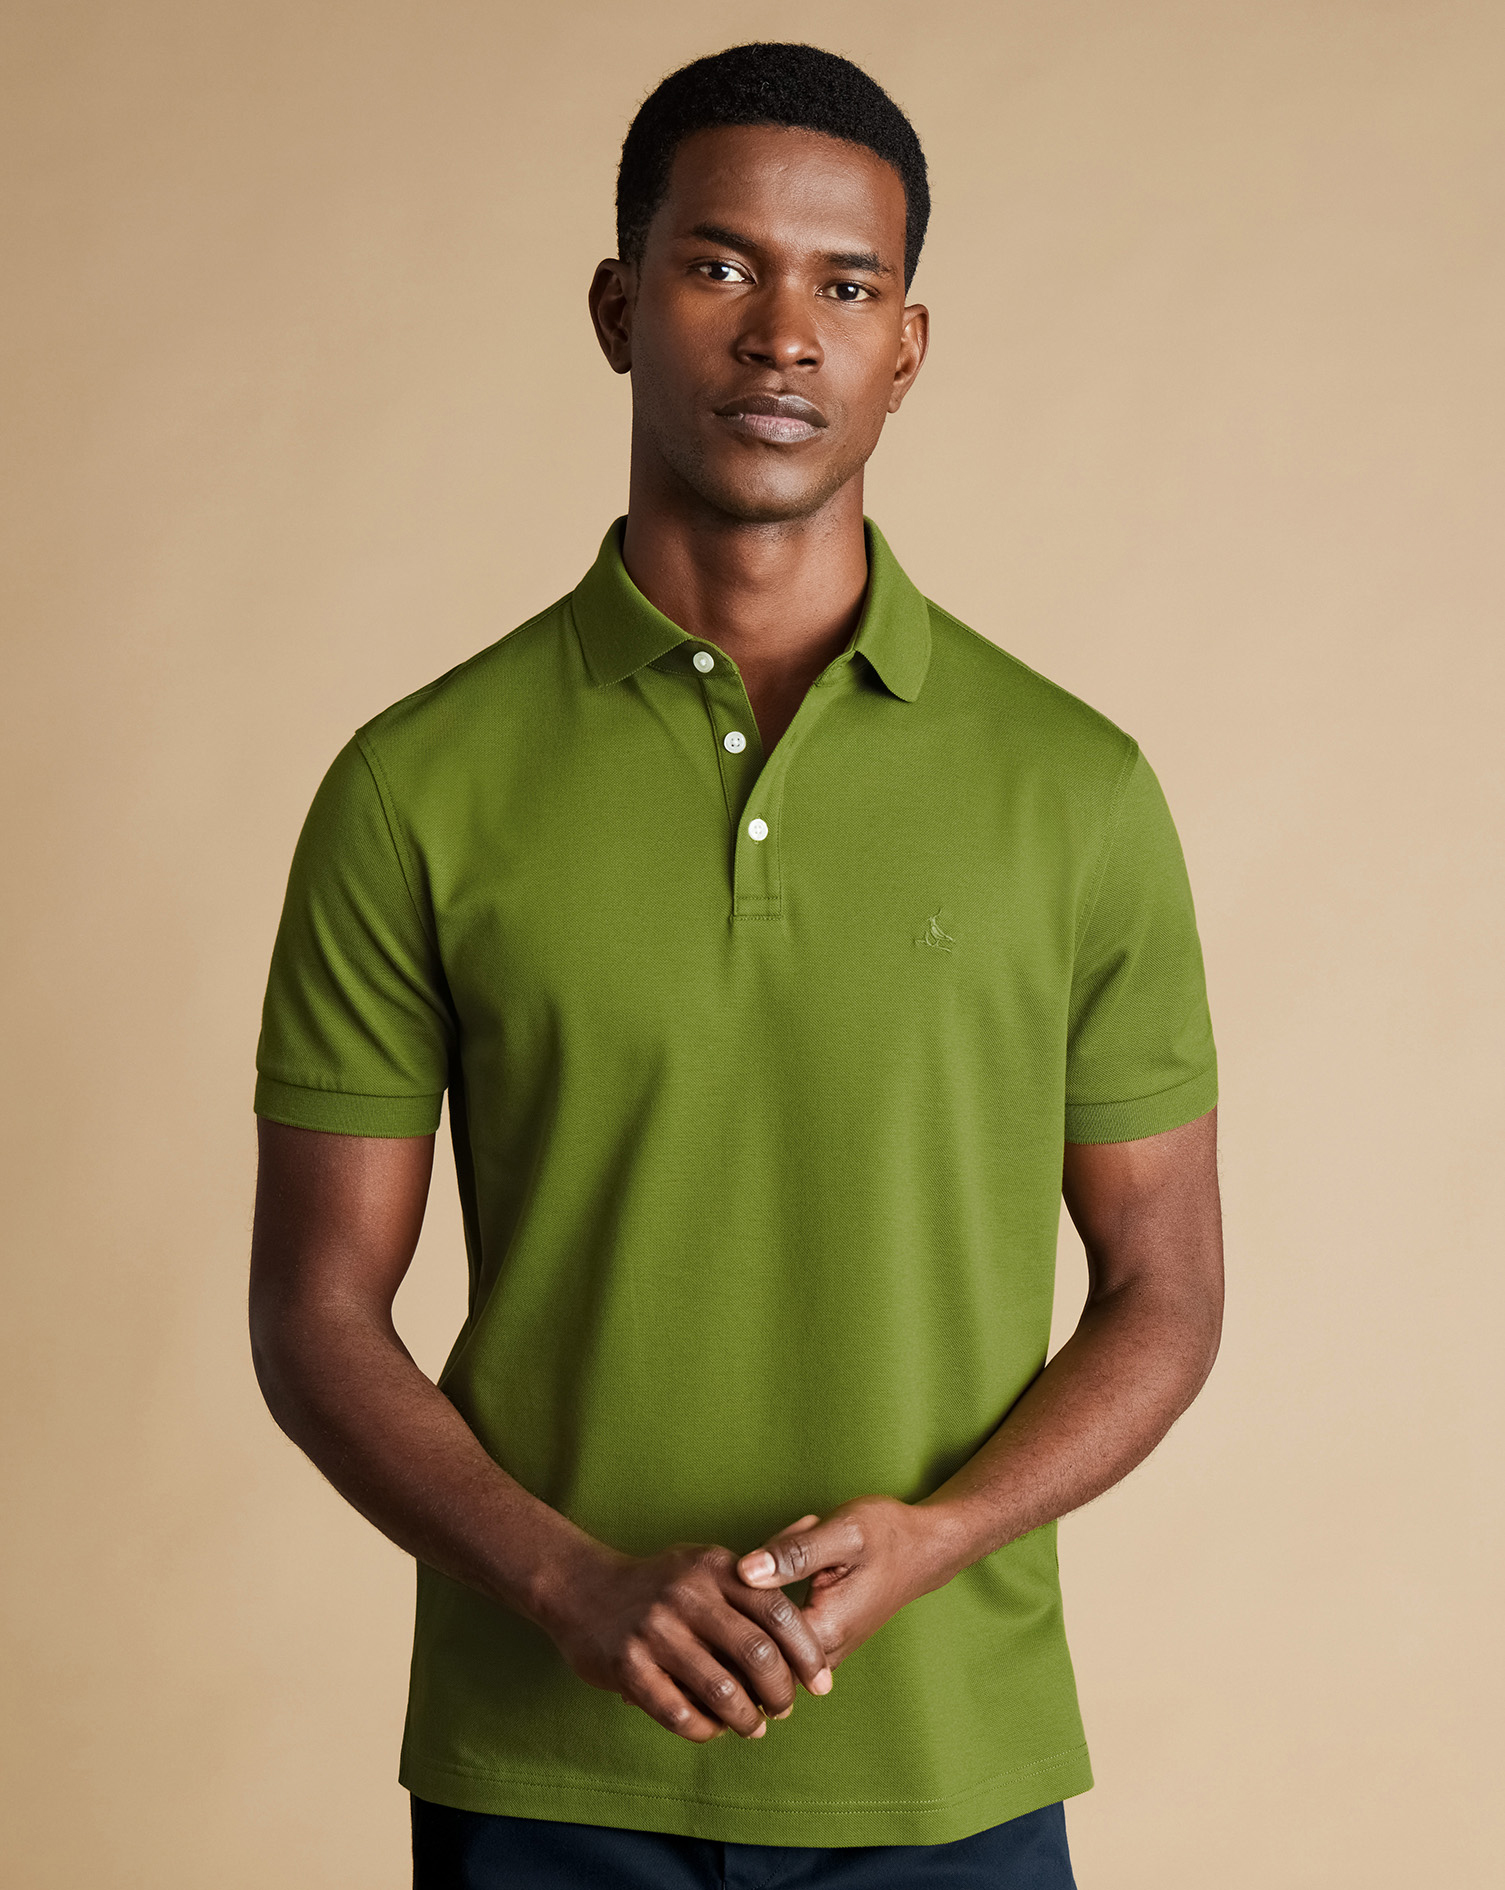 Men's Charles Tyrwhitt Pique Polo Shirt - Bright Green Size Large Cotton
